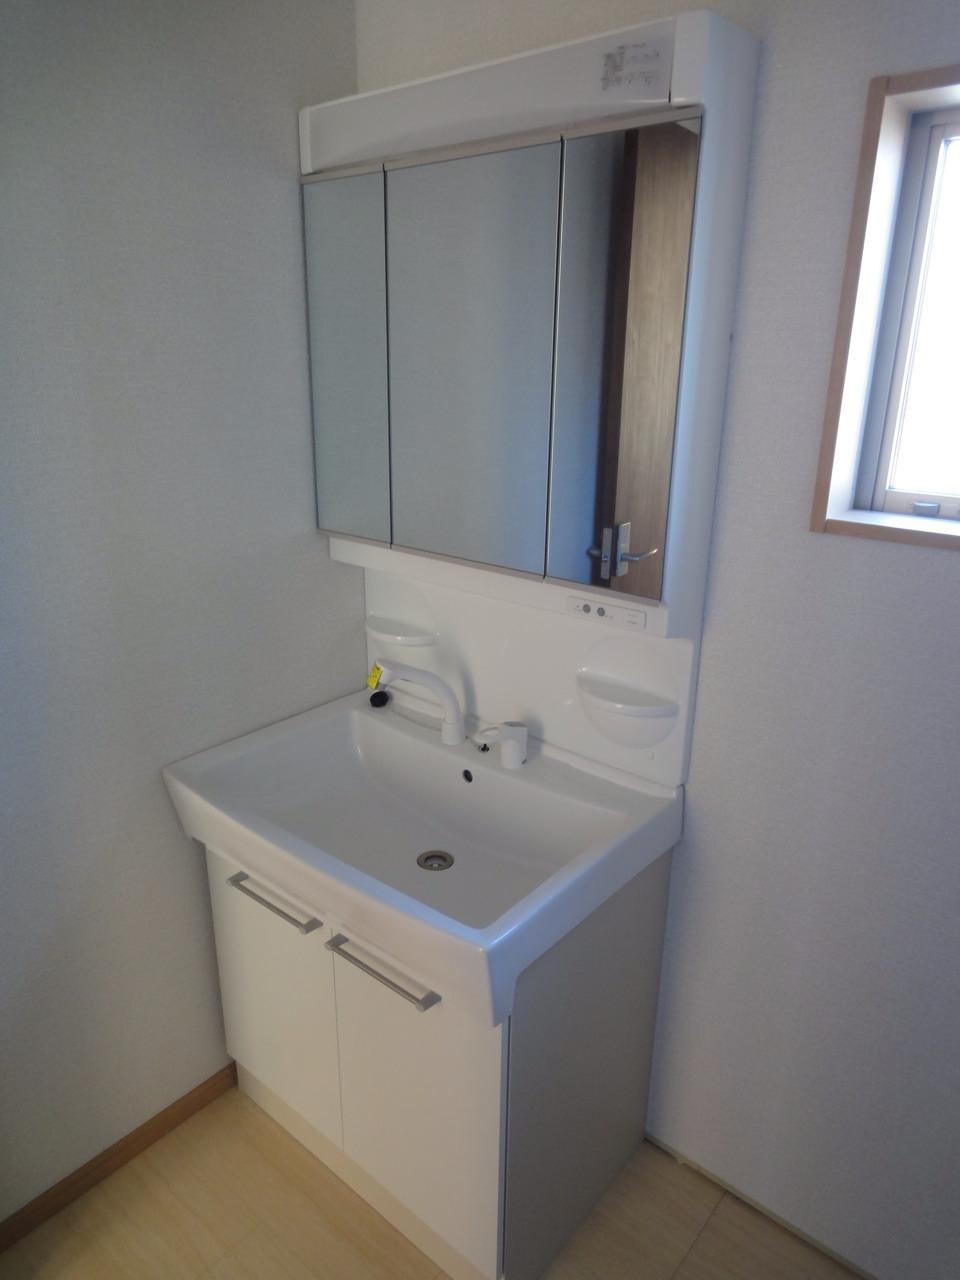 Wash basin, toilet. (2013.11.01 shooting)